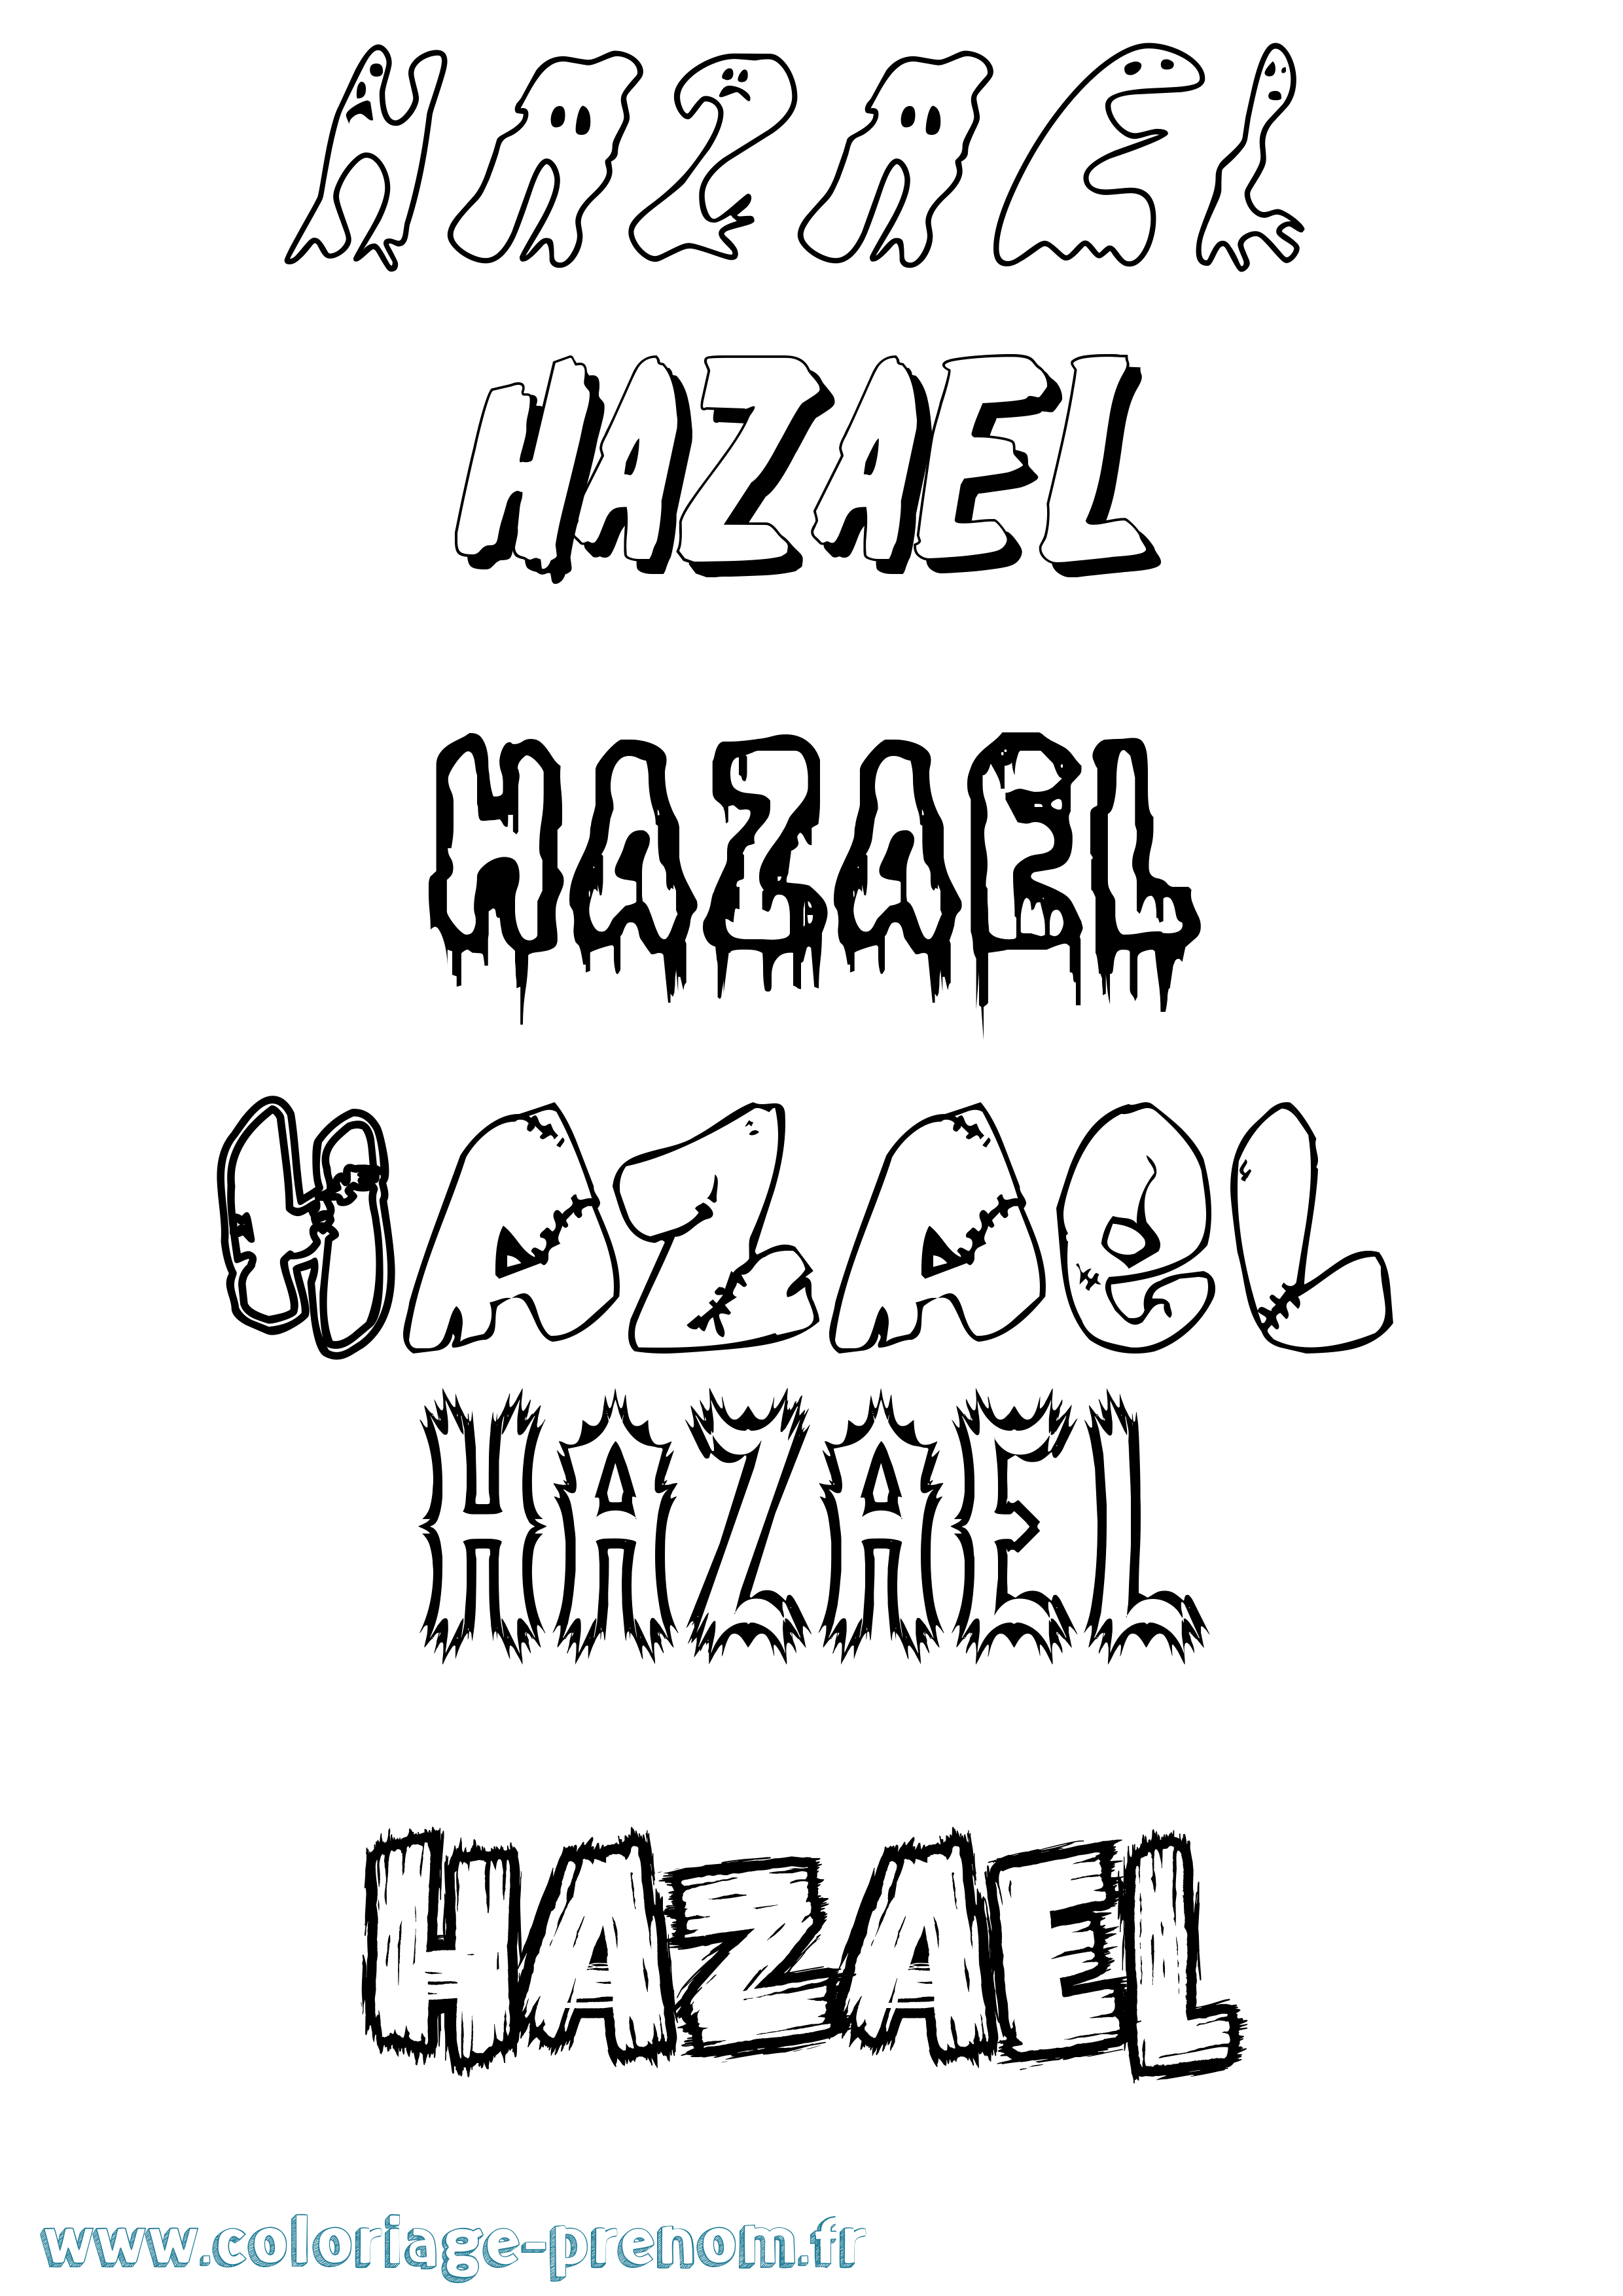 Coloriage prénom Hazael Frisson